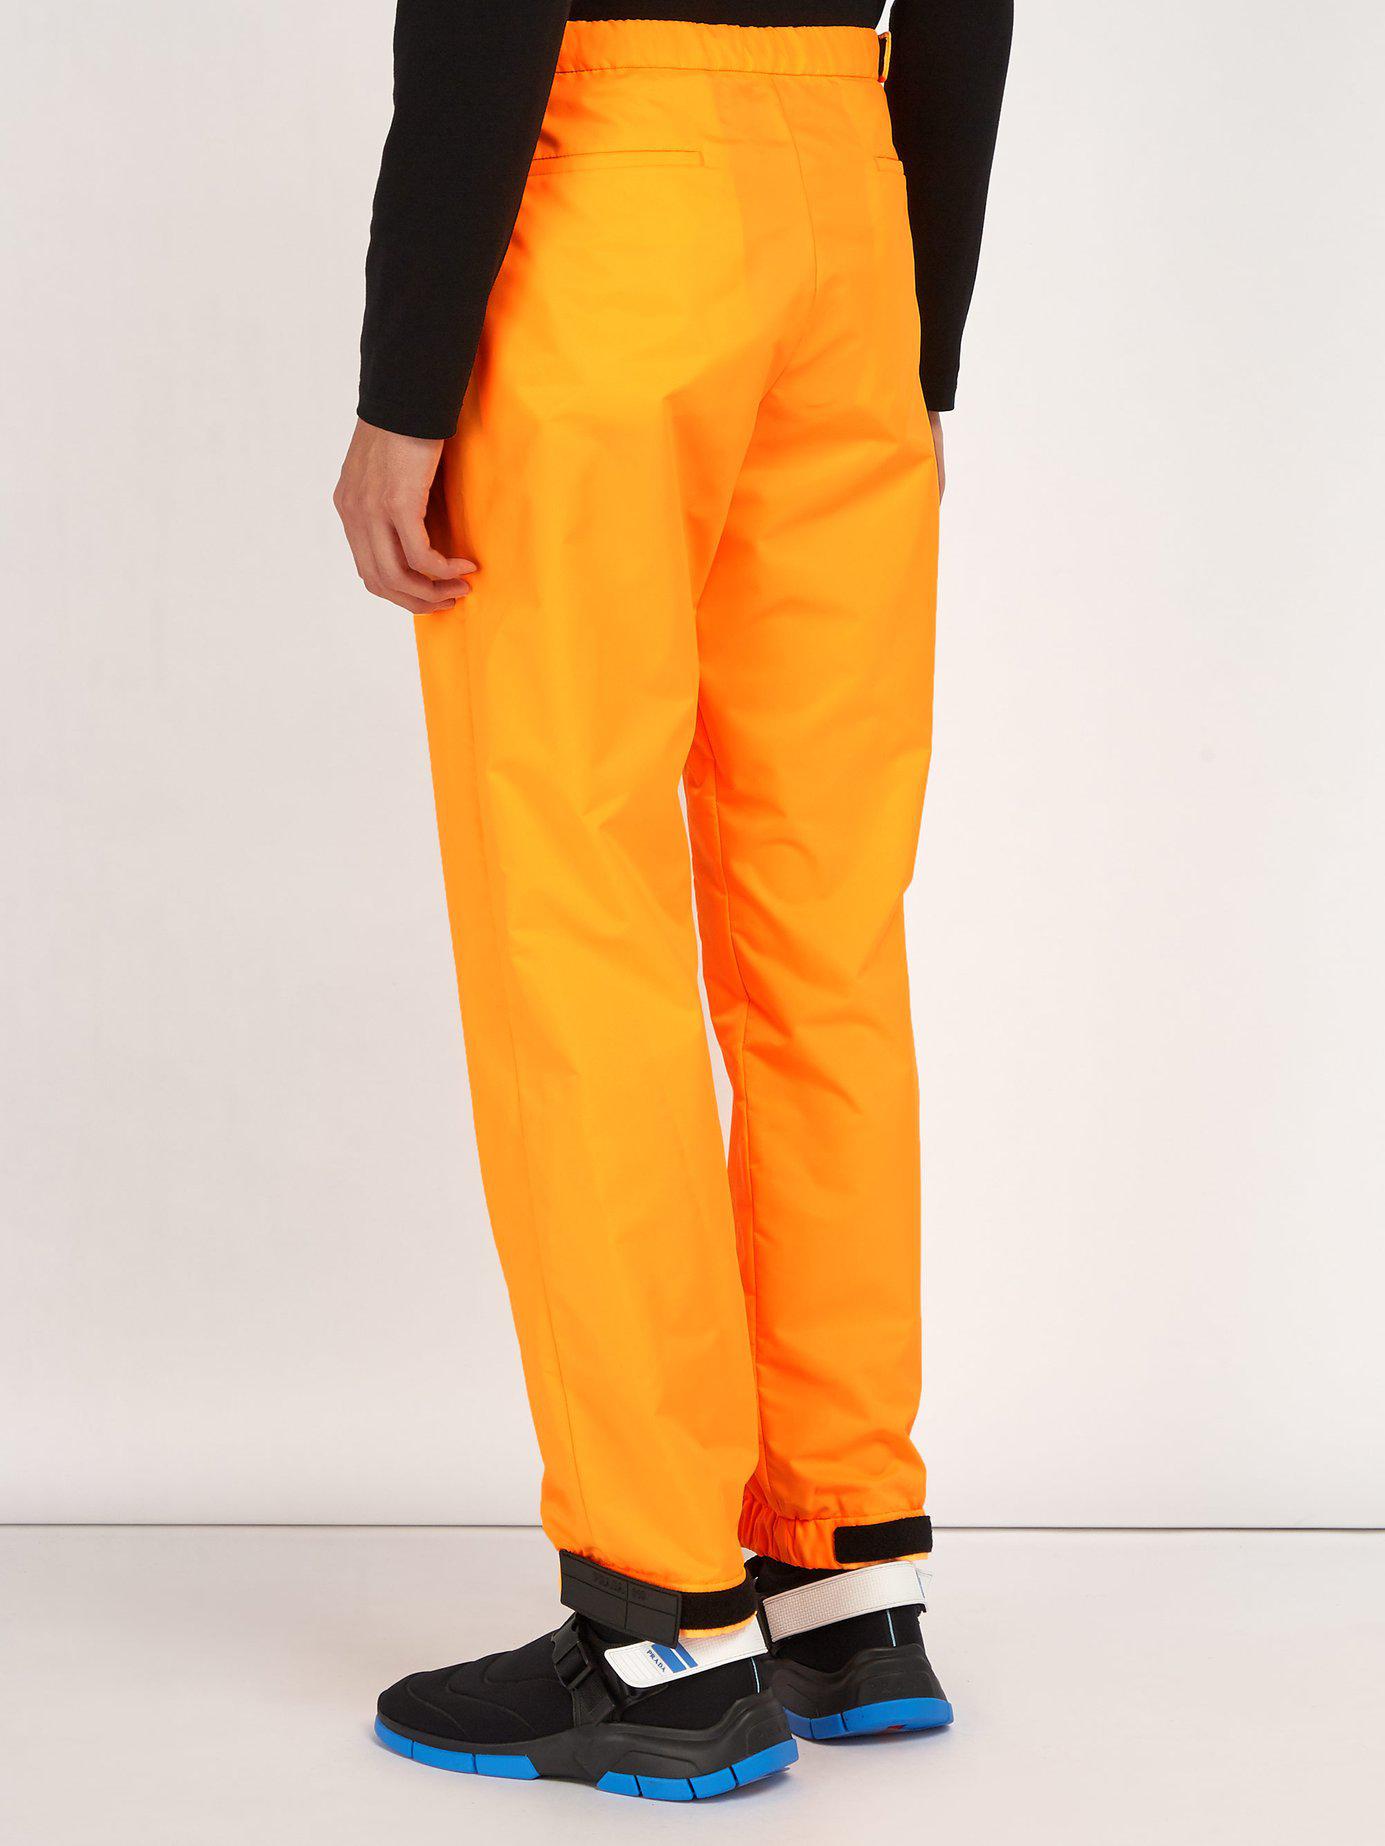 Prada Tela Technical Track Pants in Orange for Men - Lyst